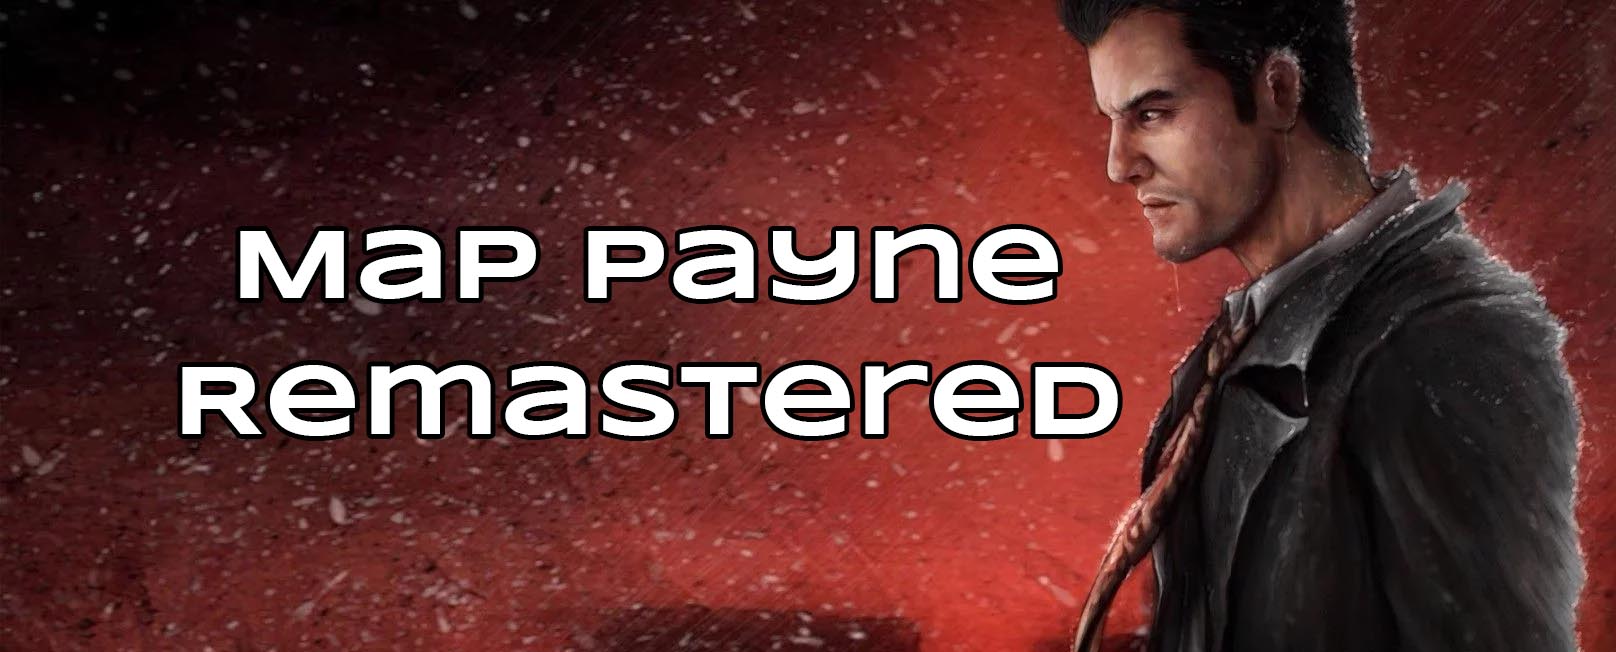 Max Payne remastered